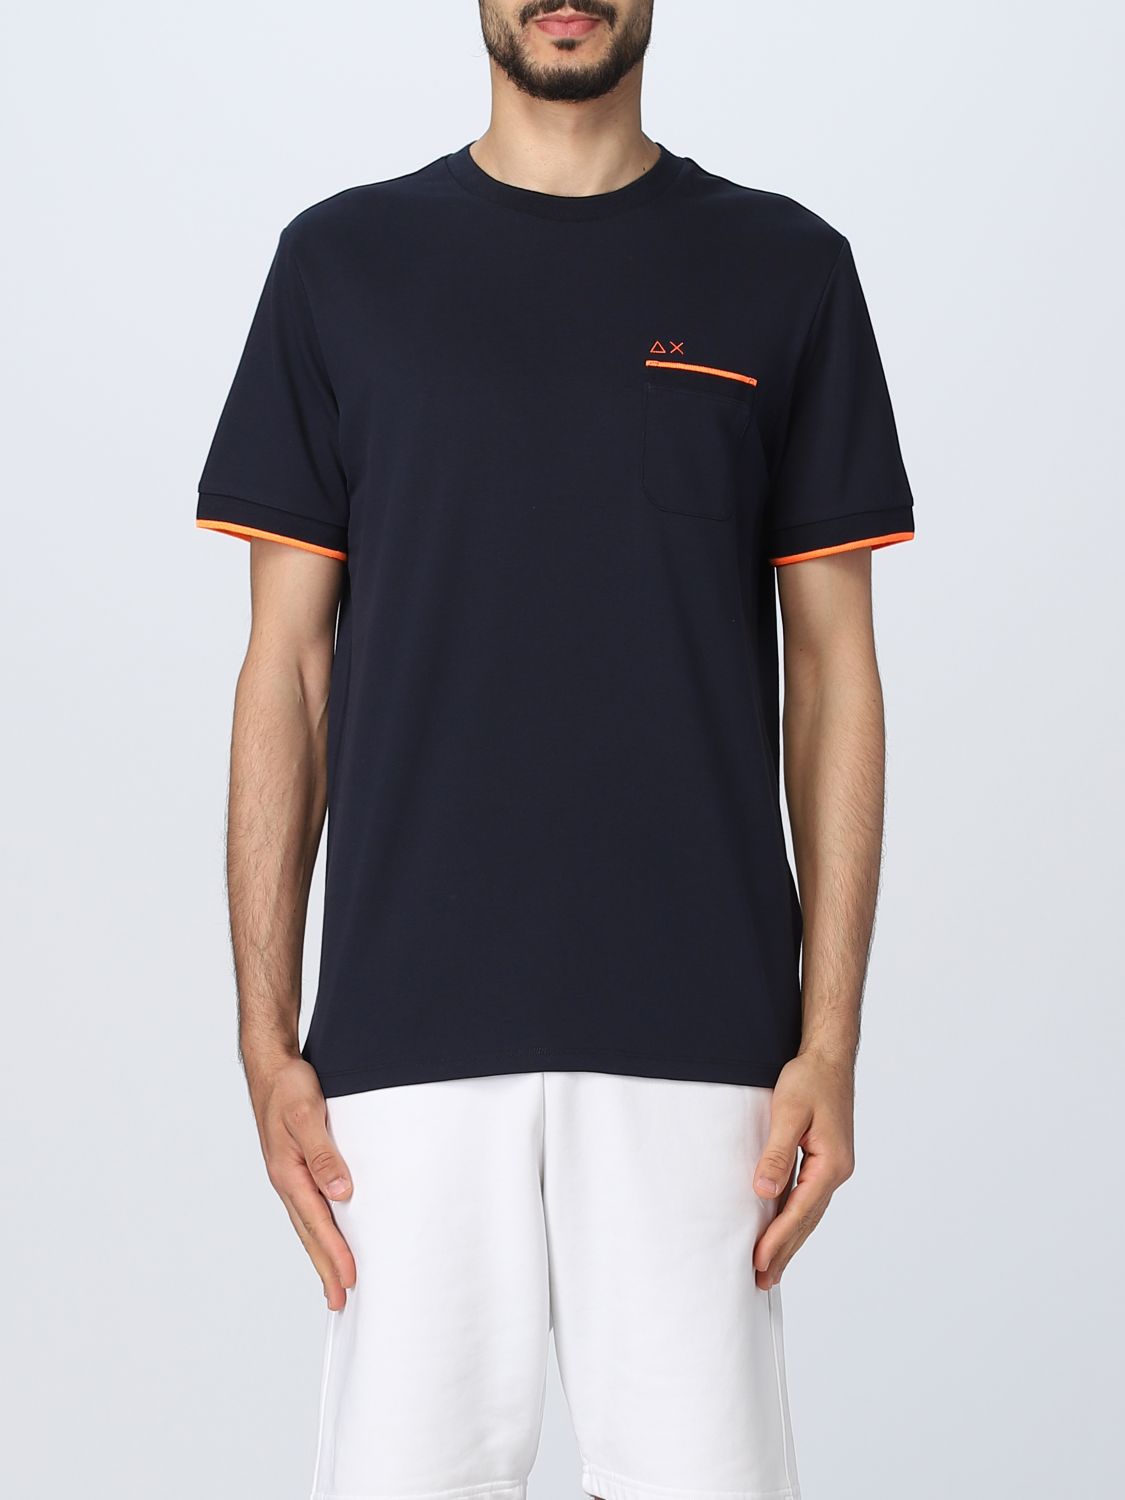 SUN 68: t-shirt for man - Blue | Sun 68 t-shirt T33121 online on GIGLIO.COM